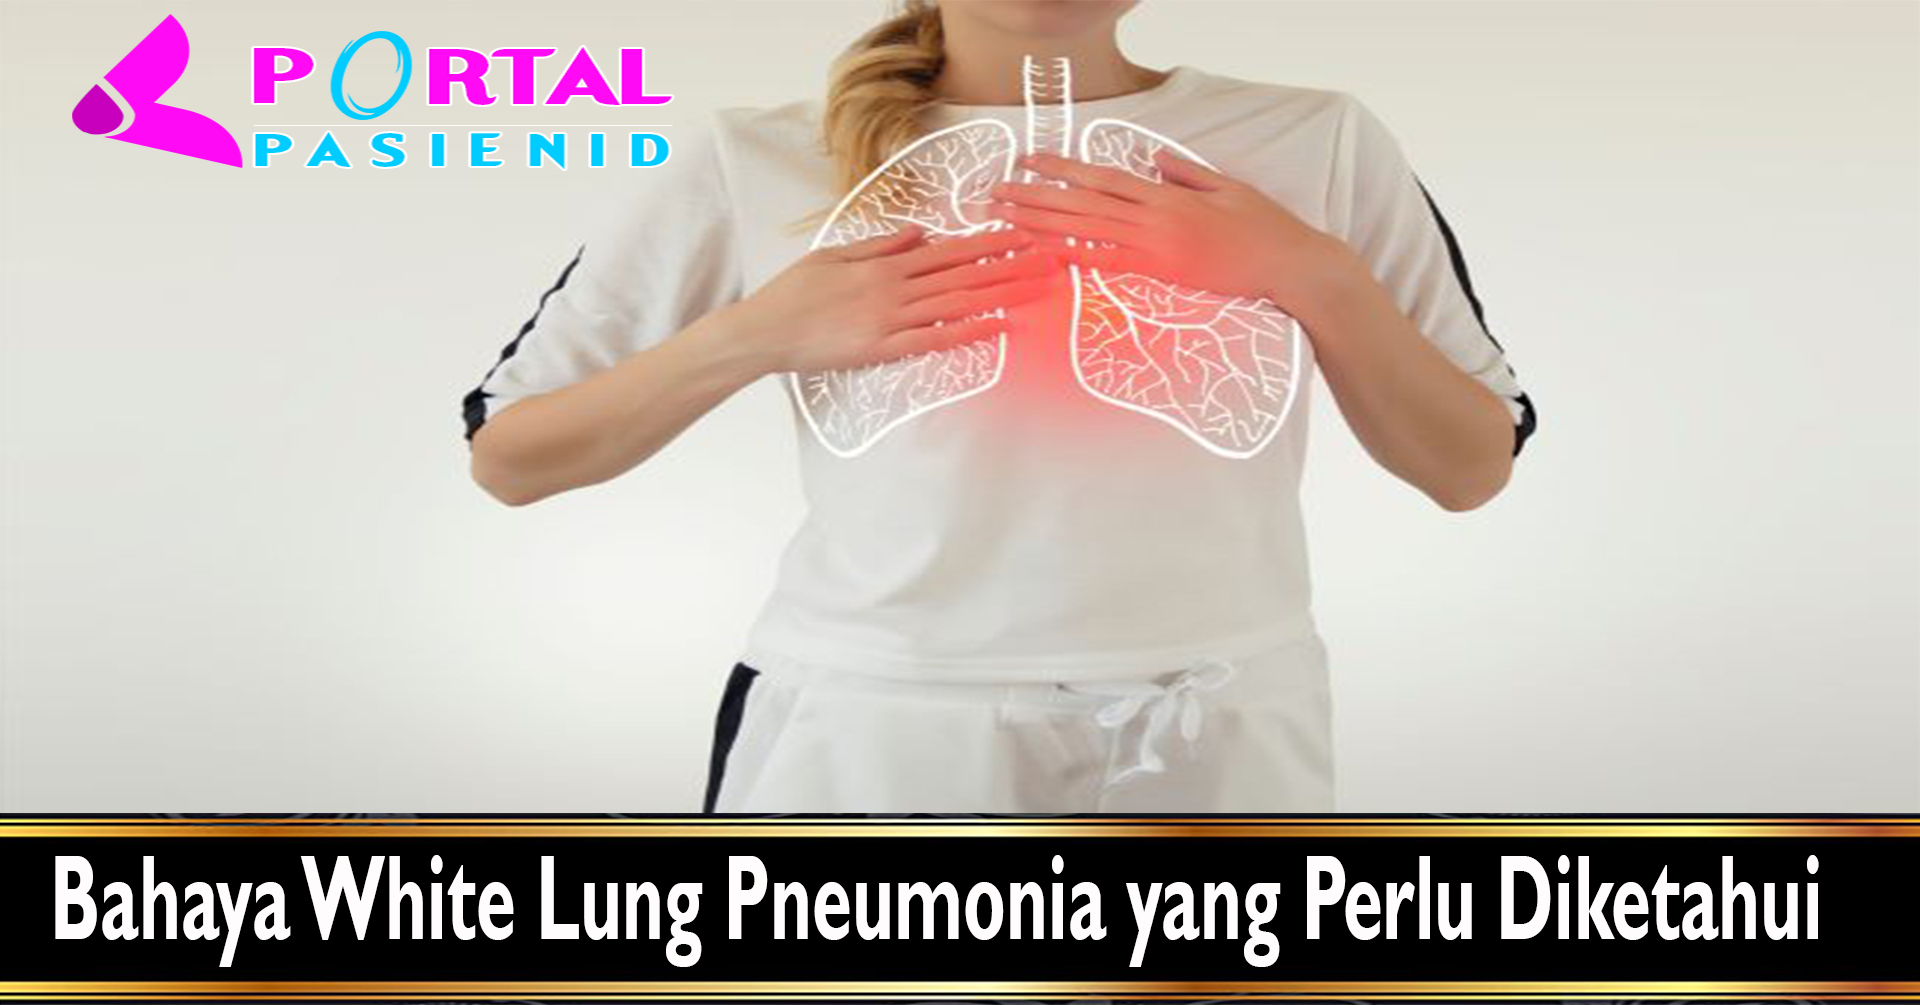 Bahaya White Lung Pneumonia yang Perlu Diketahui